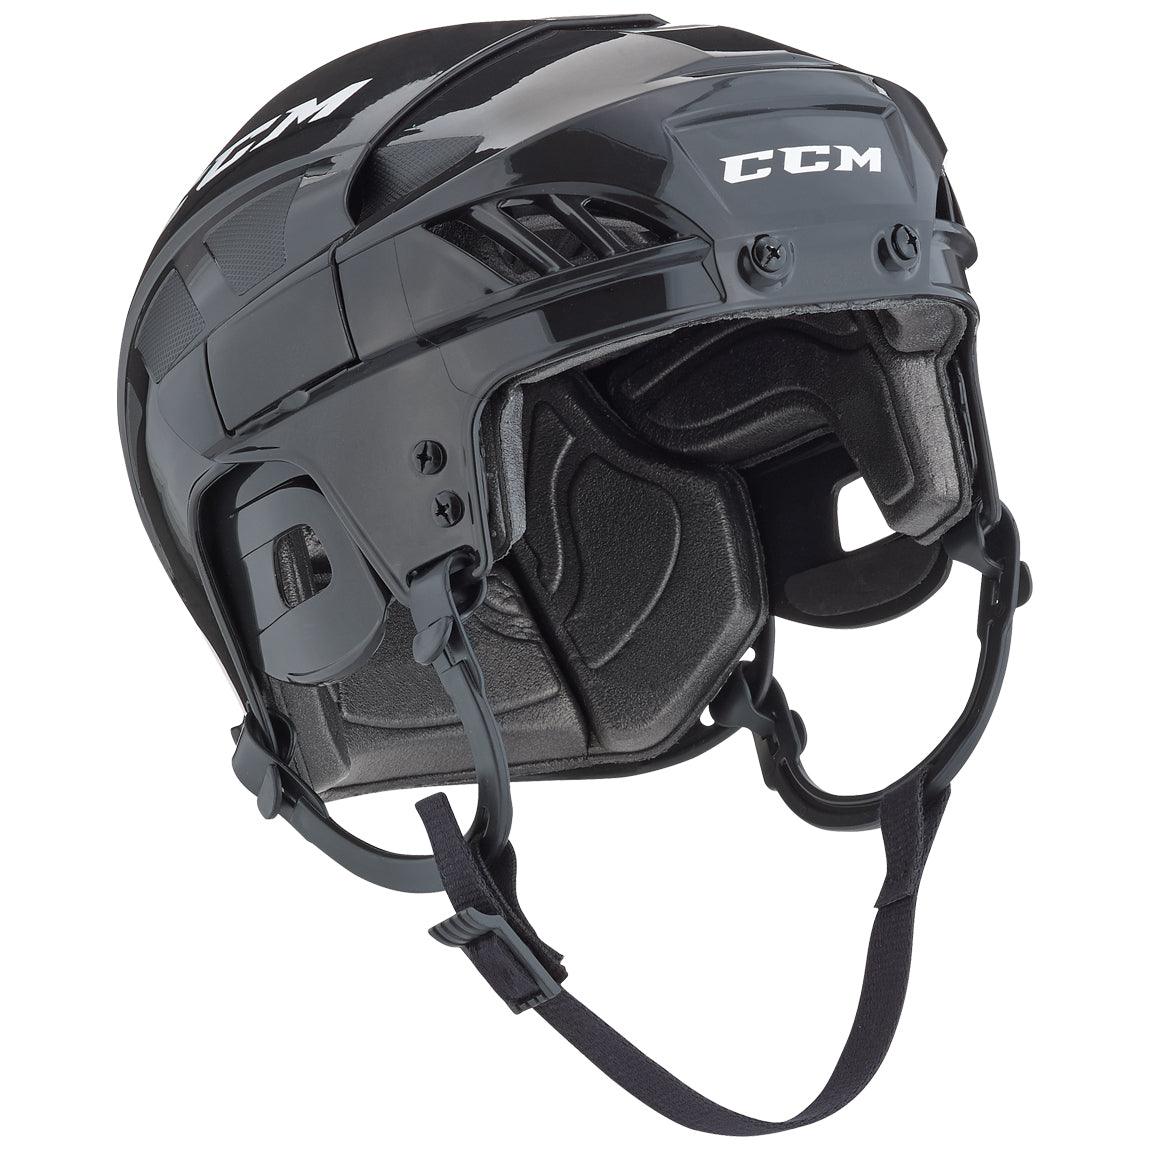 Fitlite FL40 Helmet - Senior - Sports Excellence